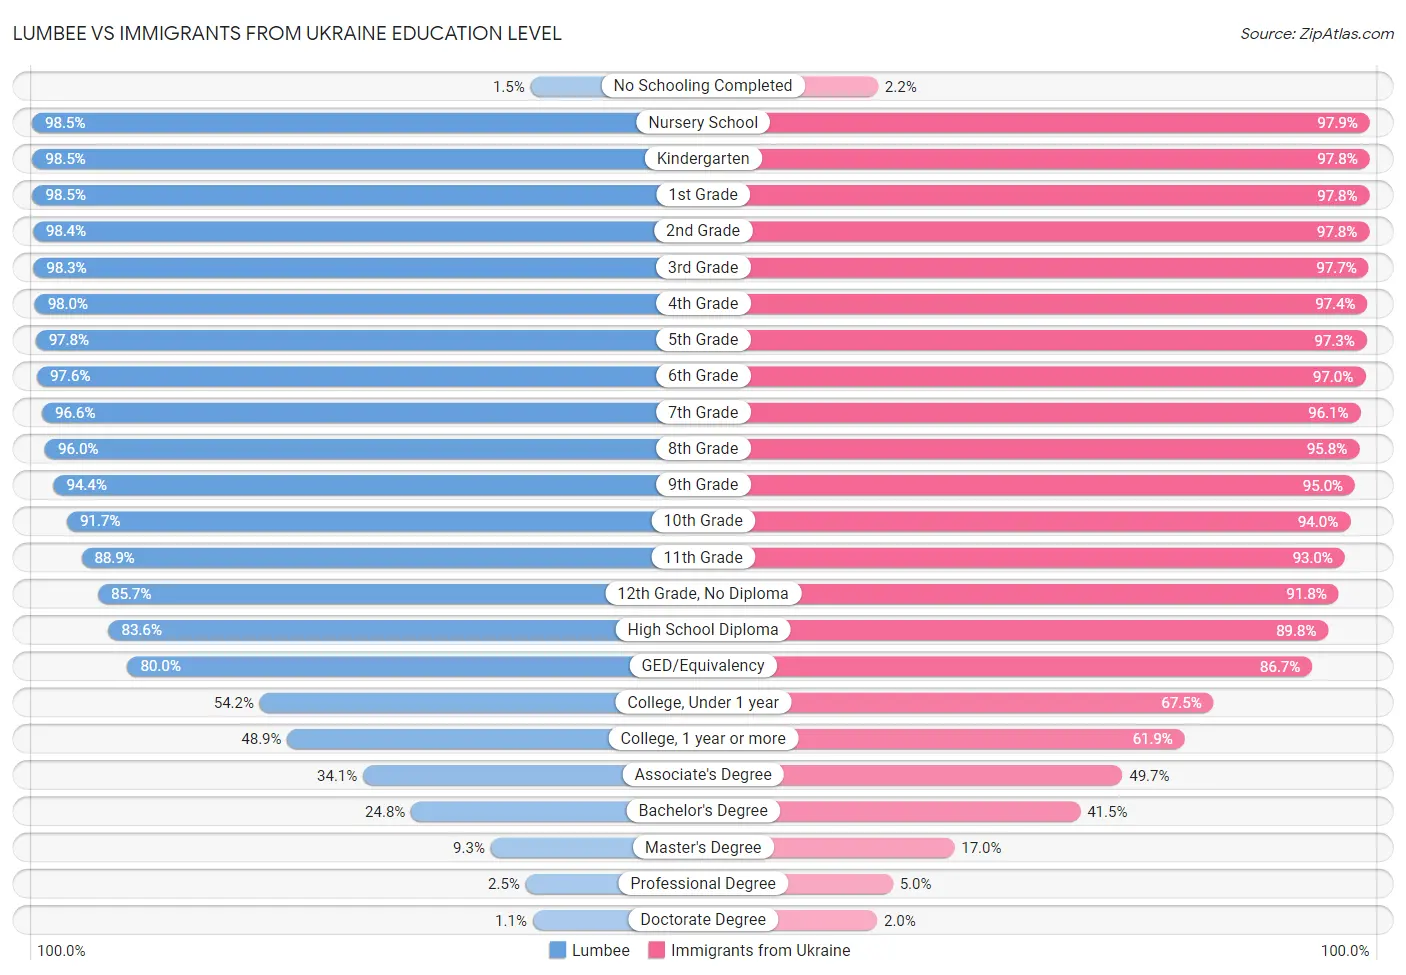 Lumbee vs Immigrants from Ukraine Education Level